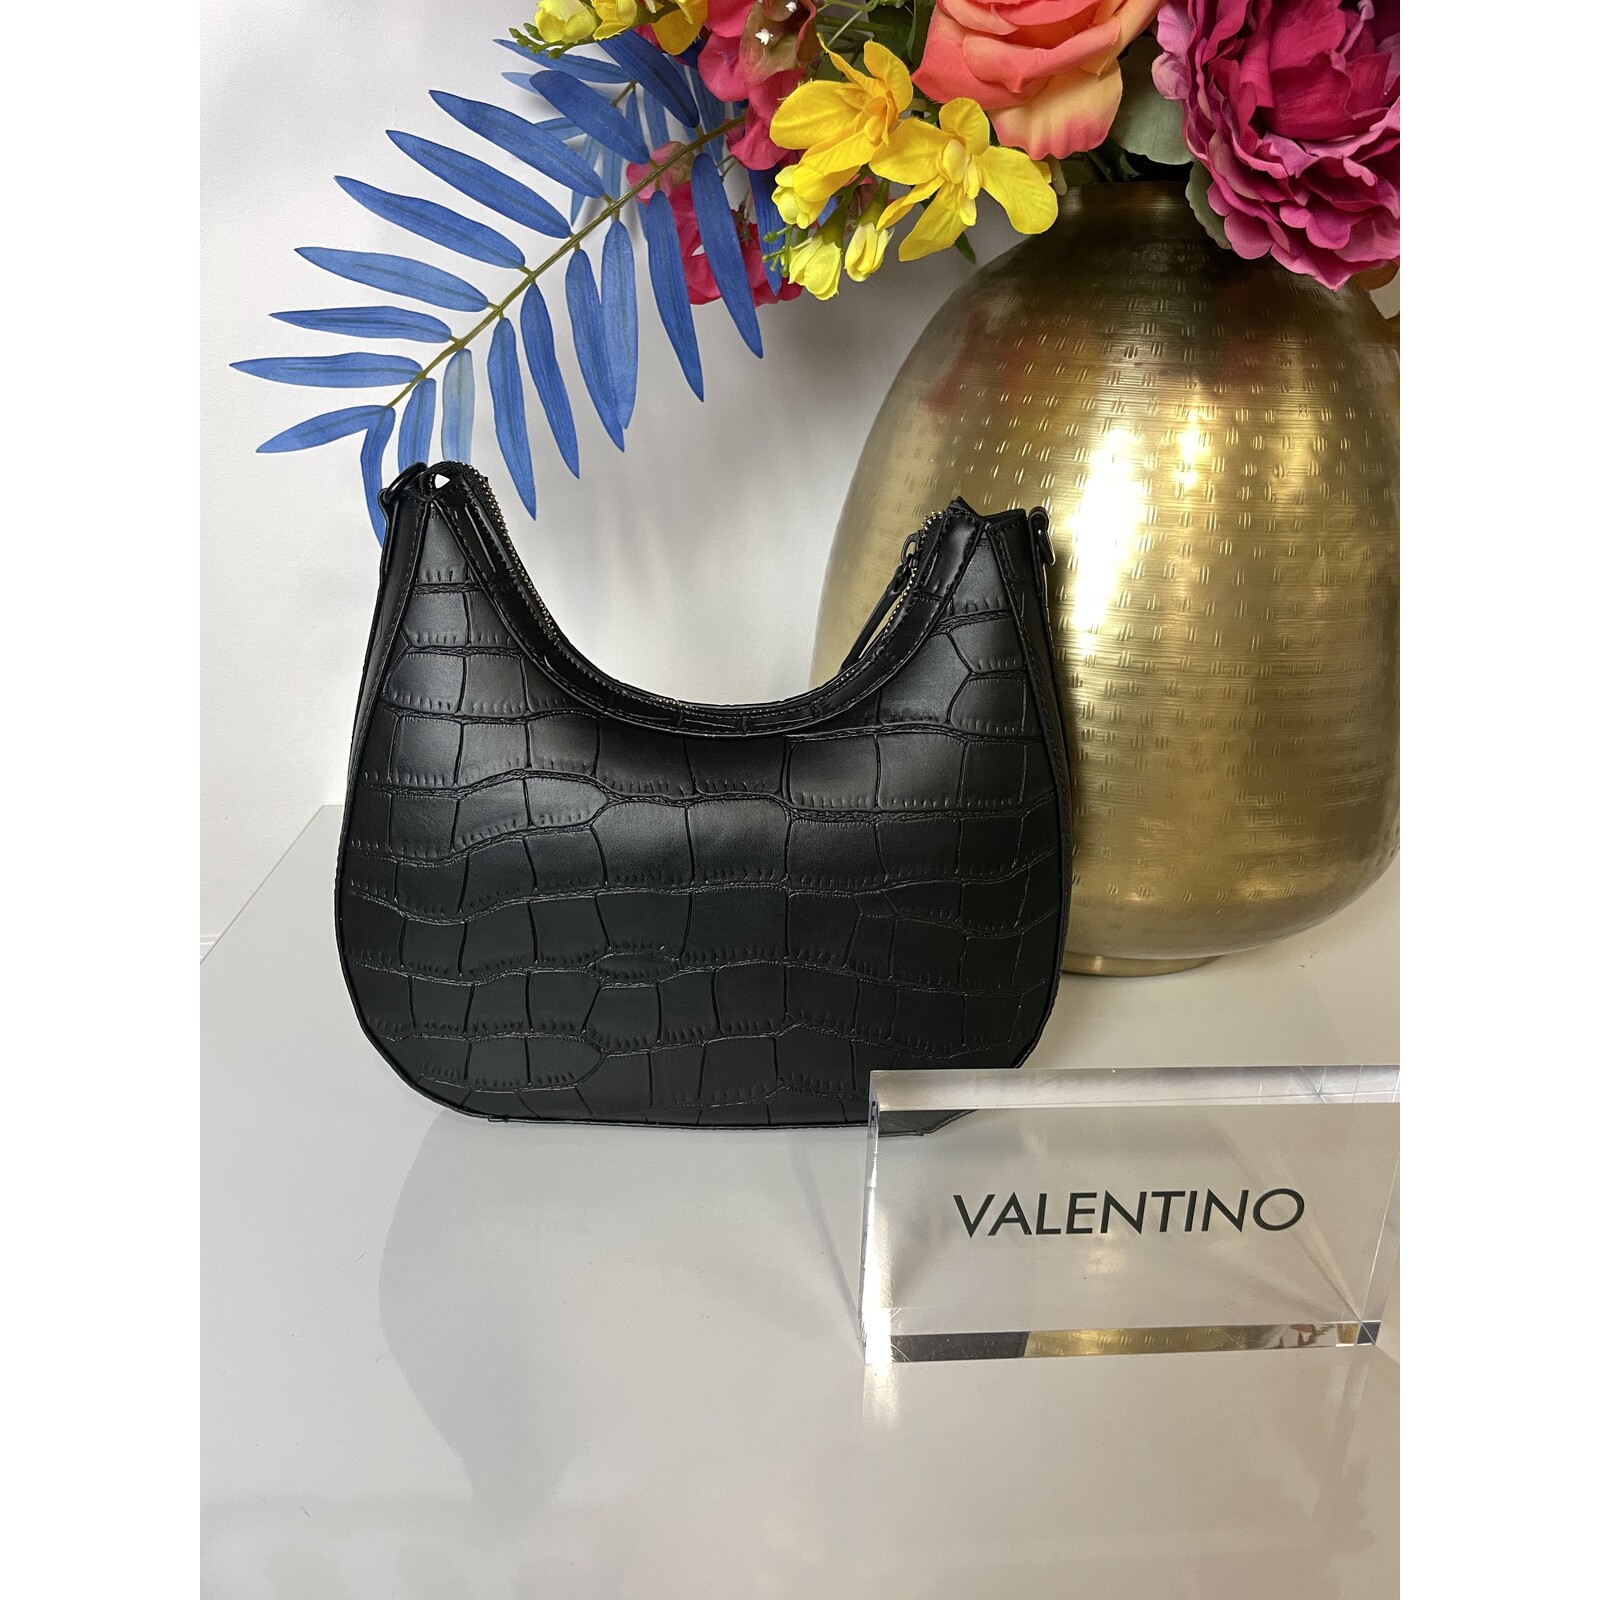 Valentino Bags Shopping Bag Surrey Black Valentino